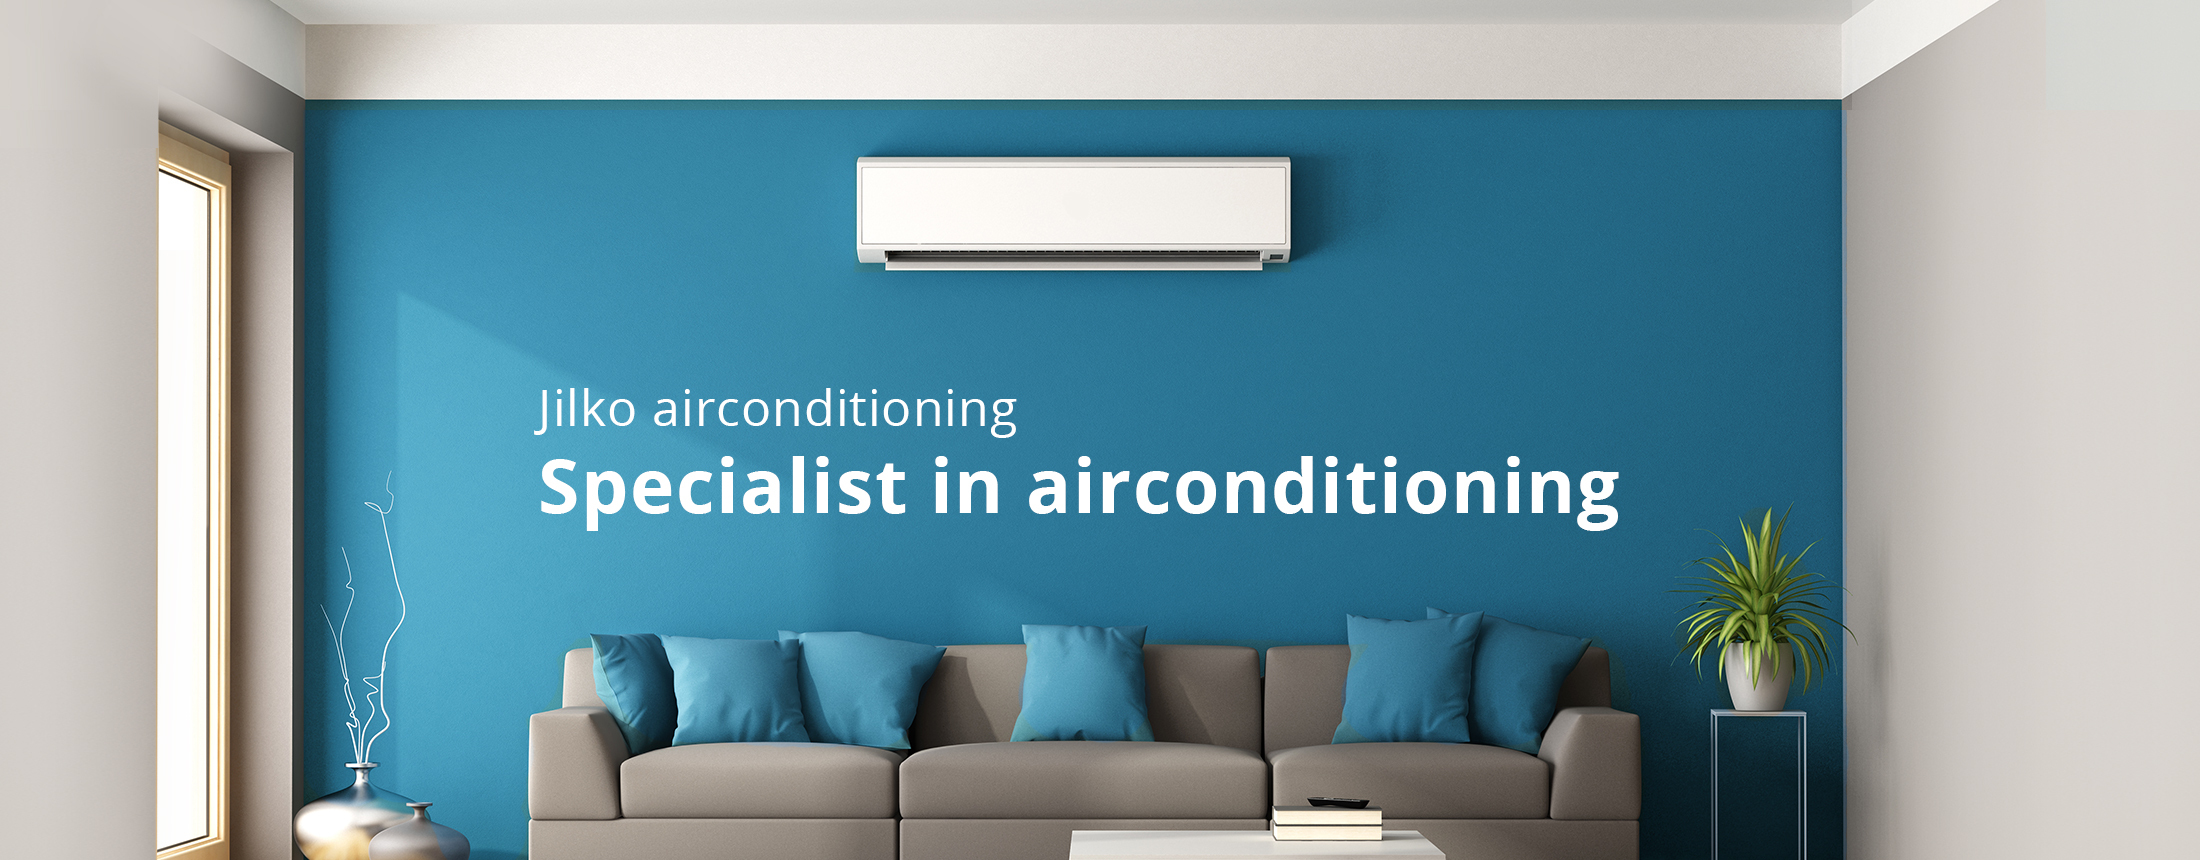 Jilko airconditioning